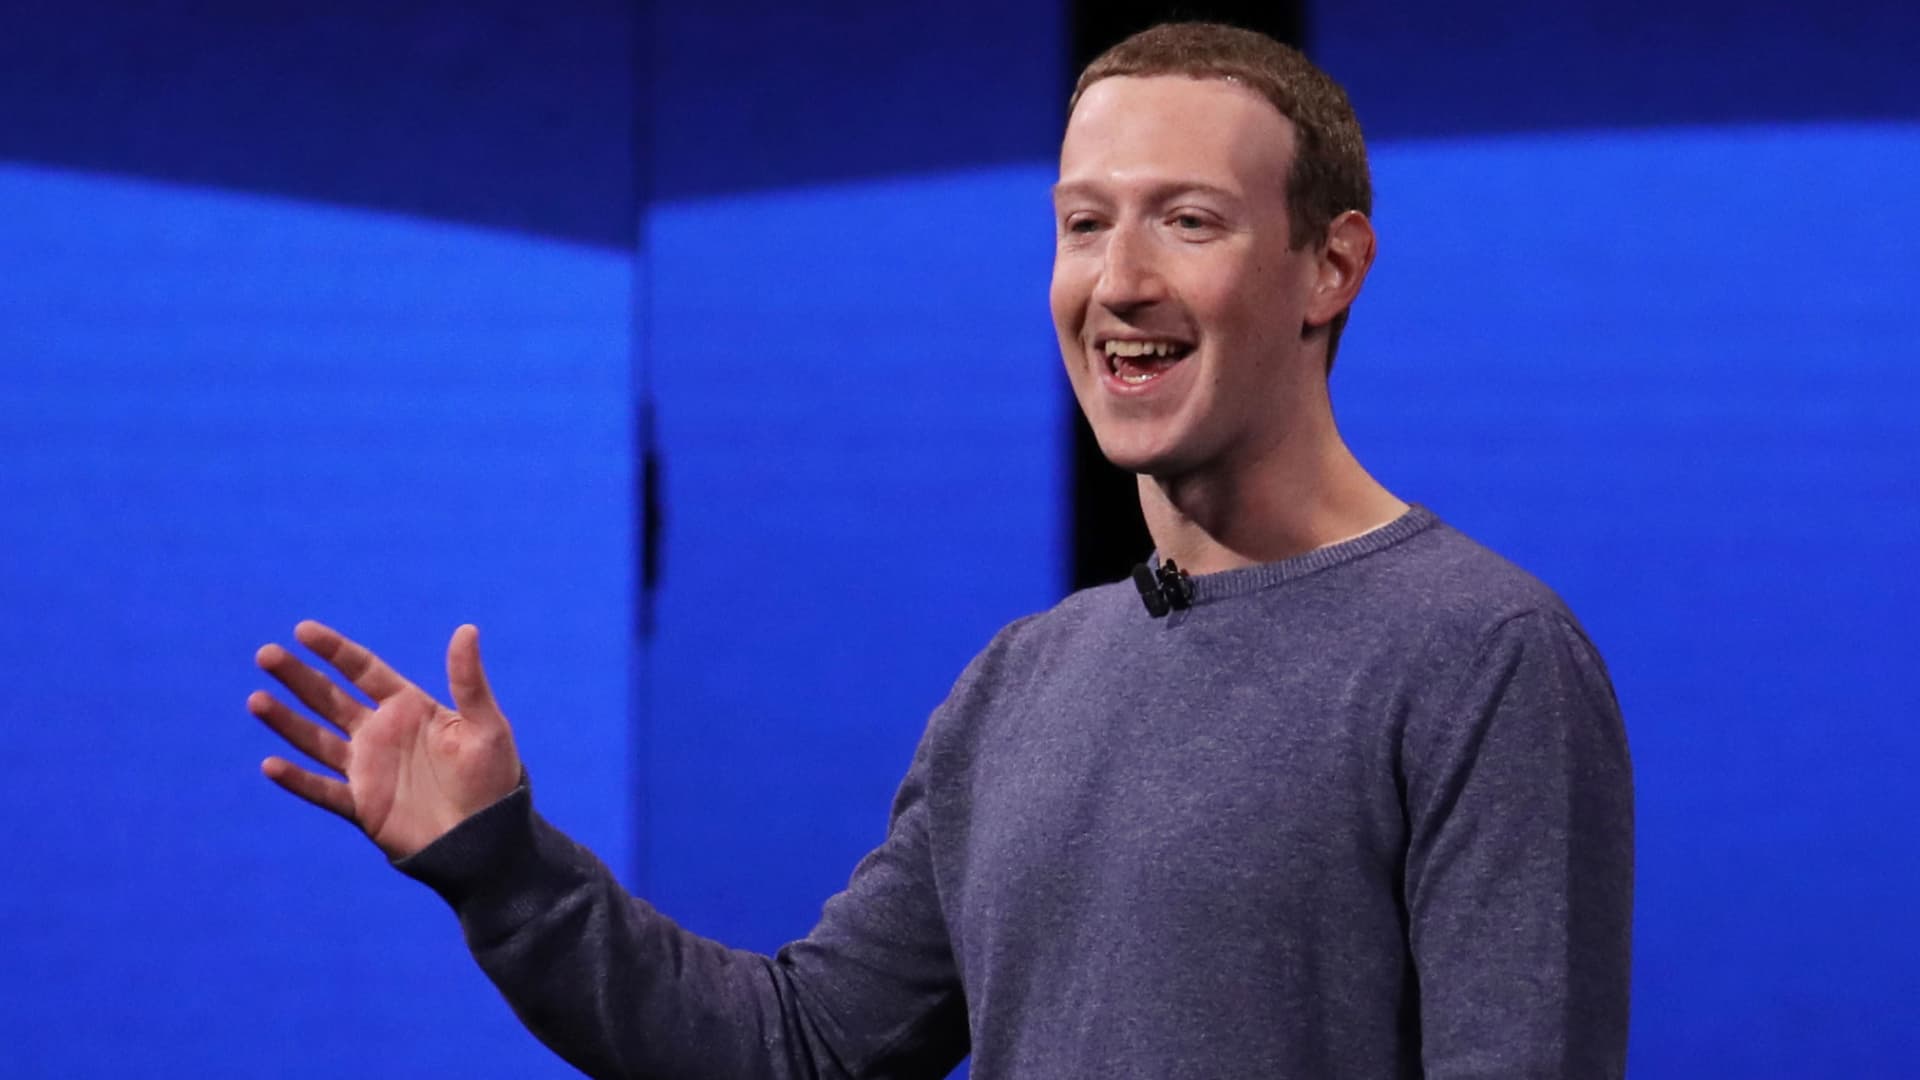 Zuckerberg's focus on Facebook groups increases Facebook engagement